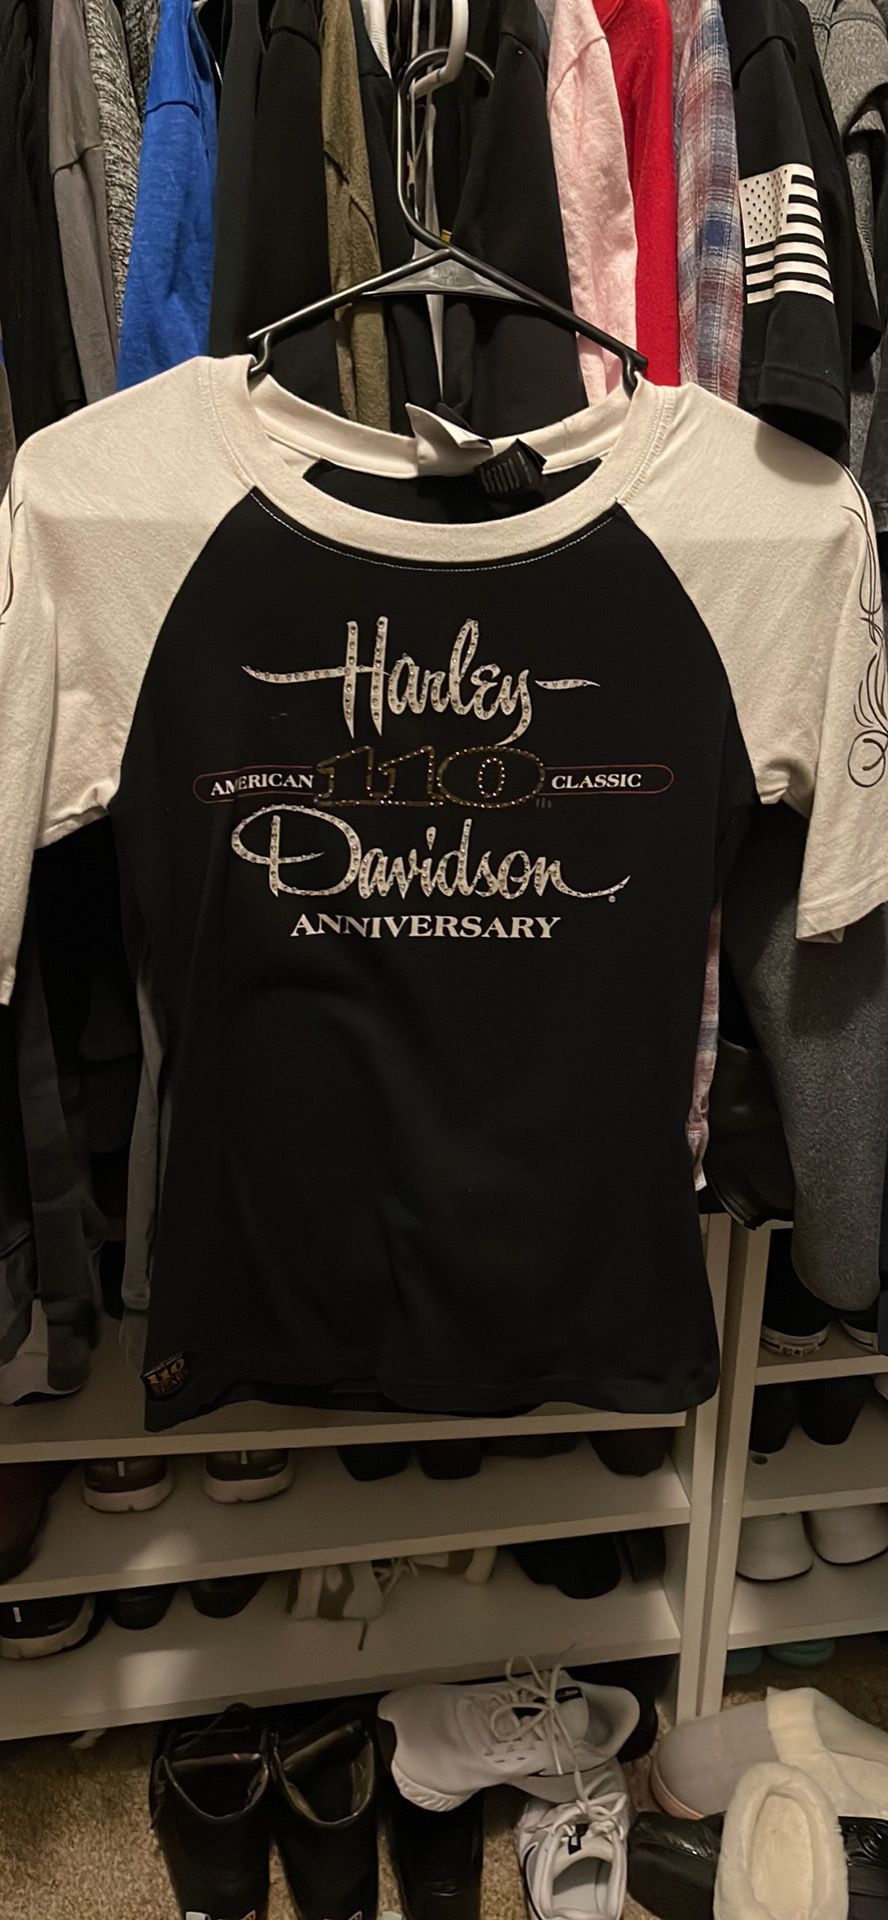 Woman’s Harley Davidson Clothing 